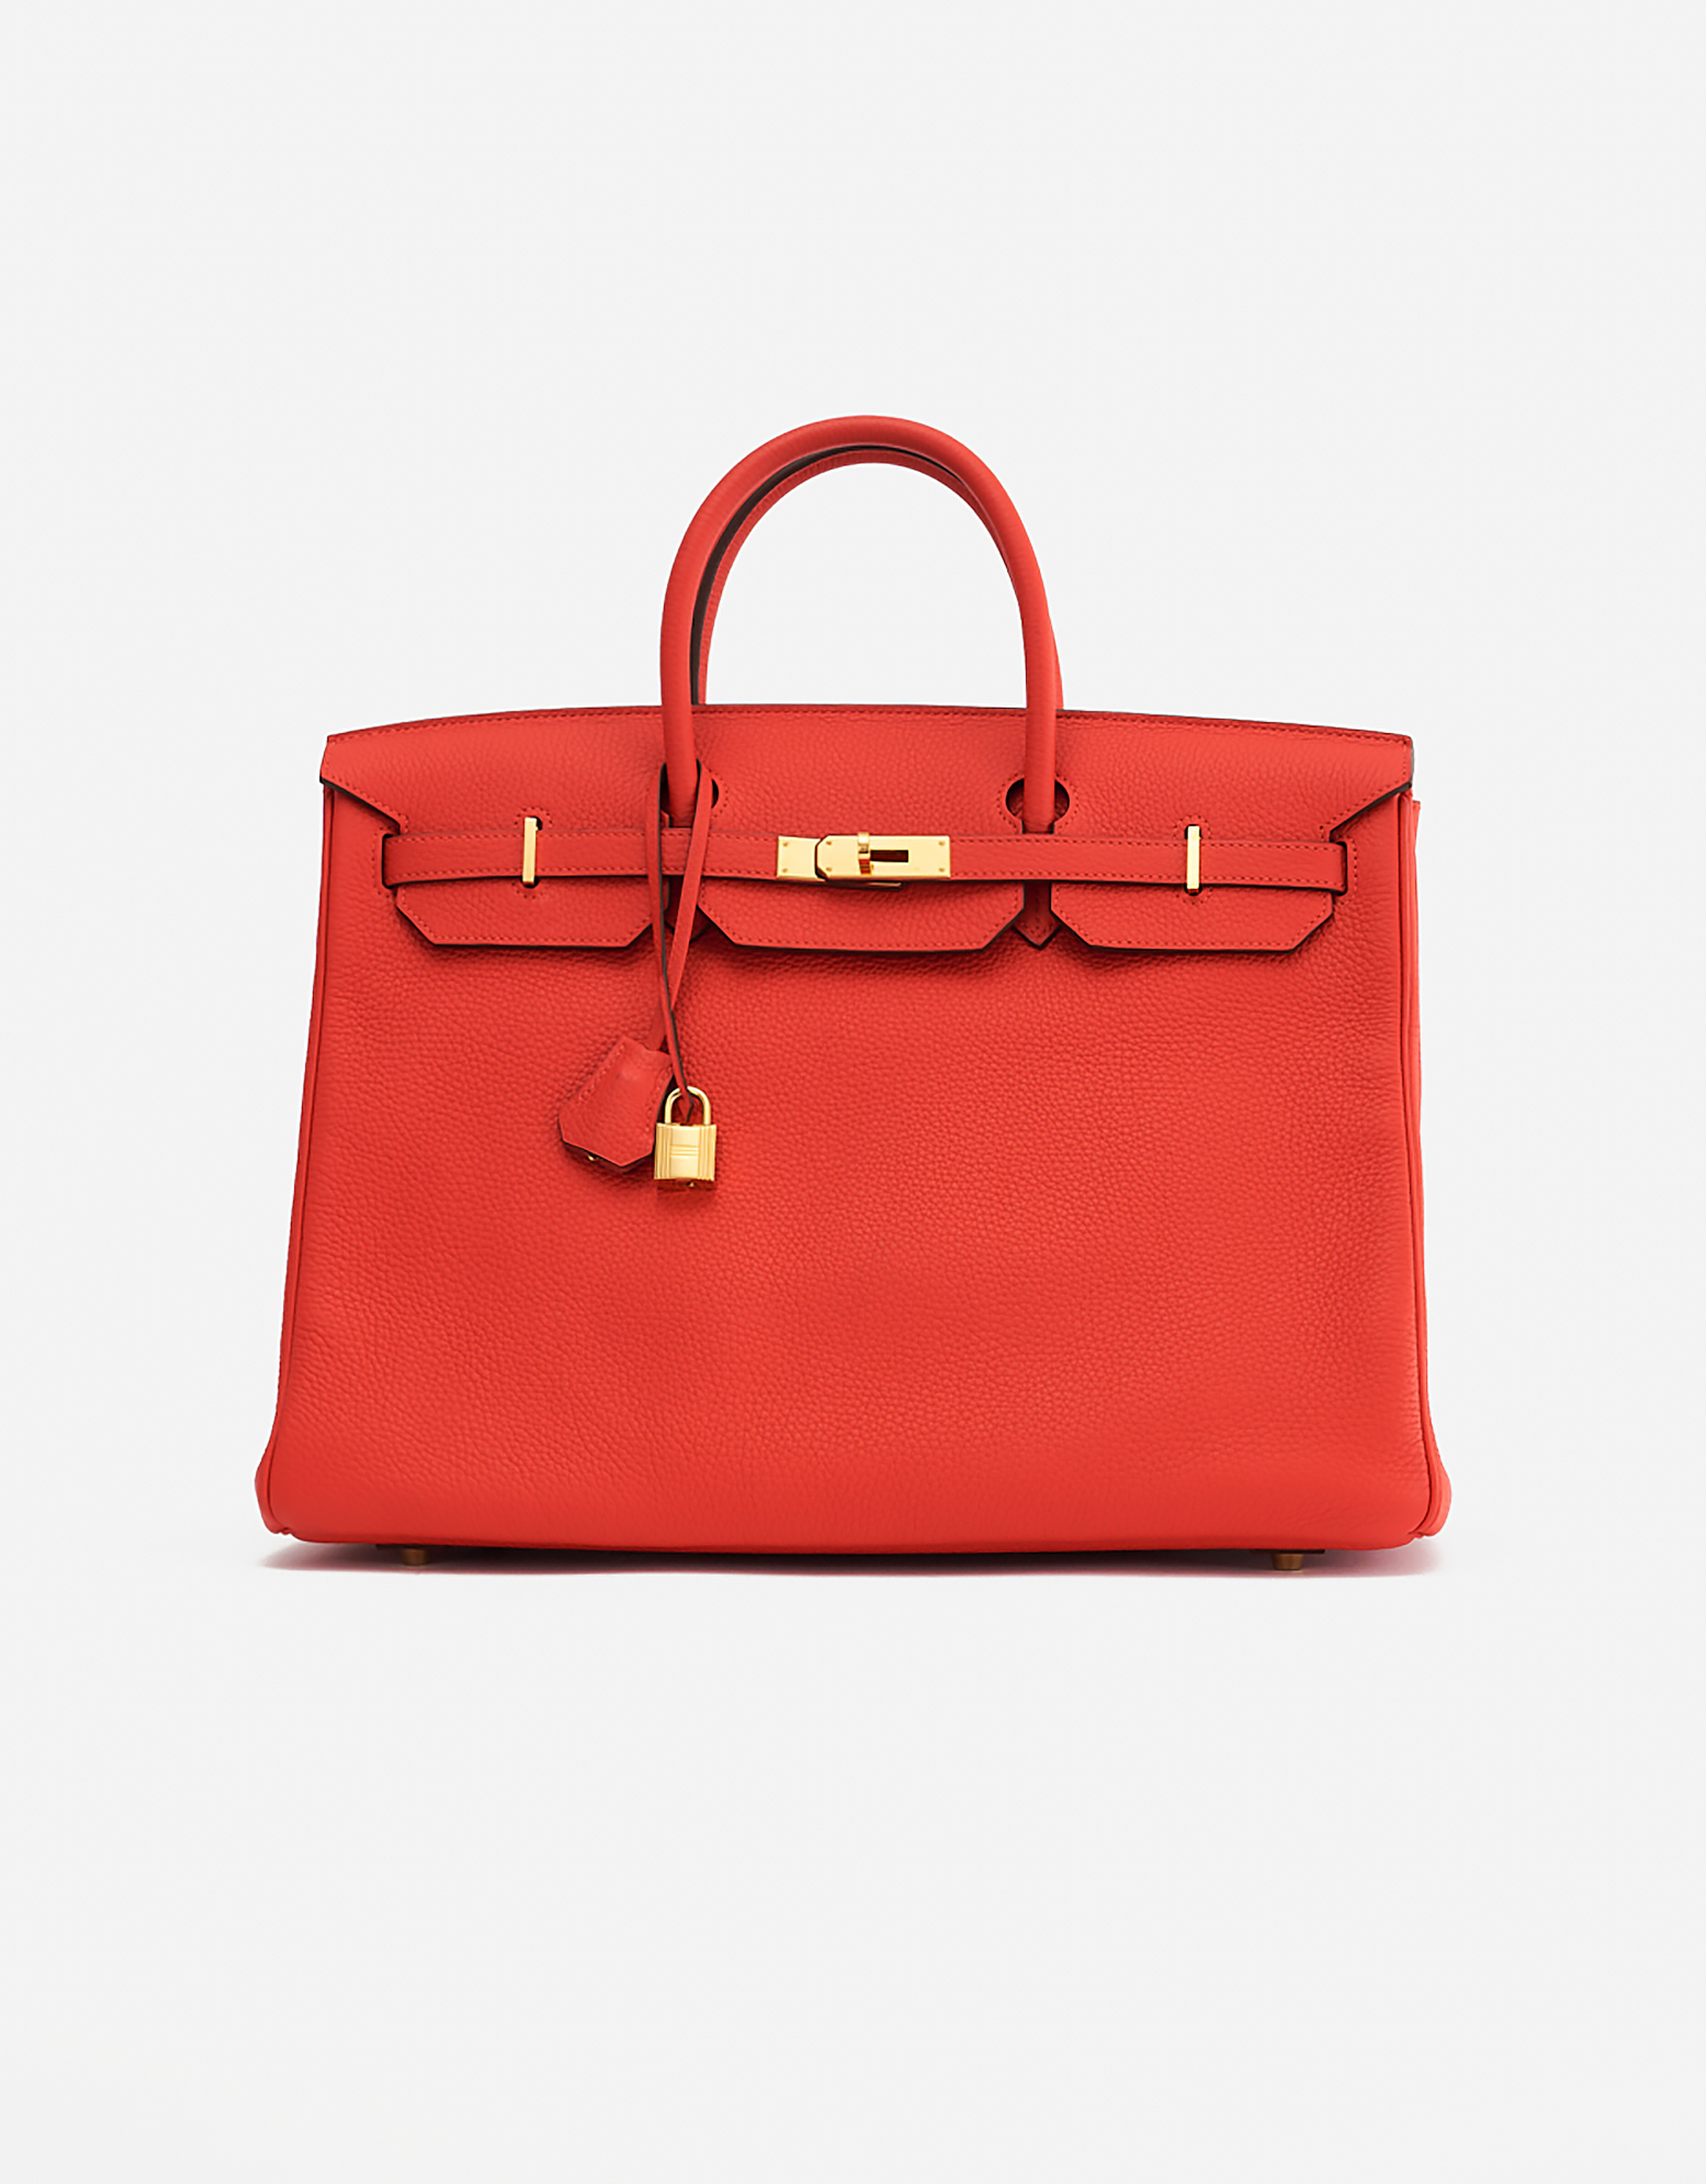 Hermès Birkin 40 Togo Leather Rouge Tomate | SACLÀB